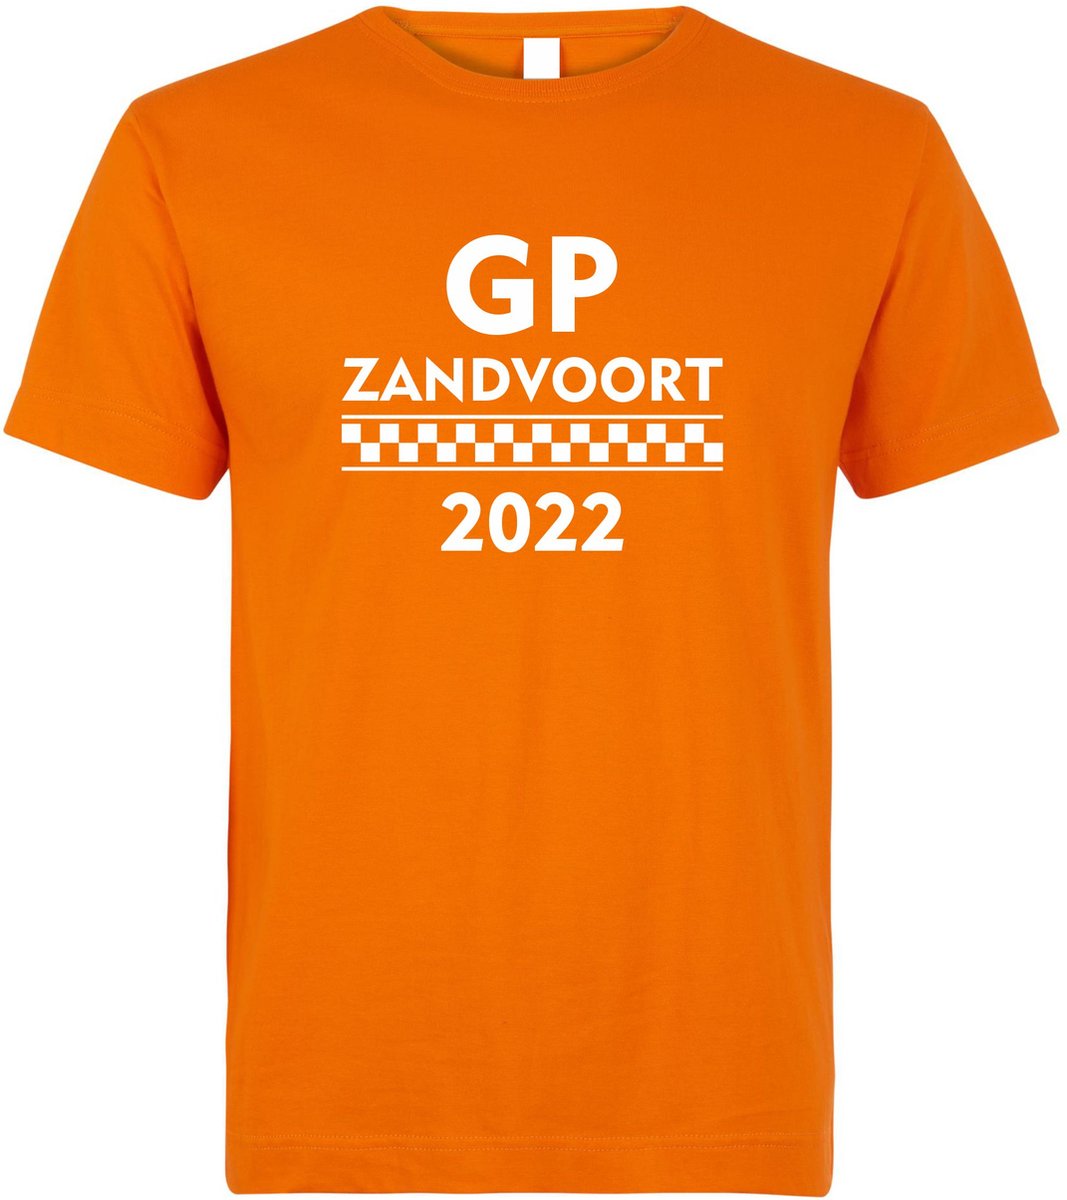 T-shirt kinderen GP Zandvoort 2022 | Max Verstappen / Red Bull Racing / Formule 1 fan | Grand Prix Circuit Zandvoort | kleding shirt | Oranje | maat 140